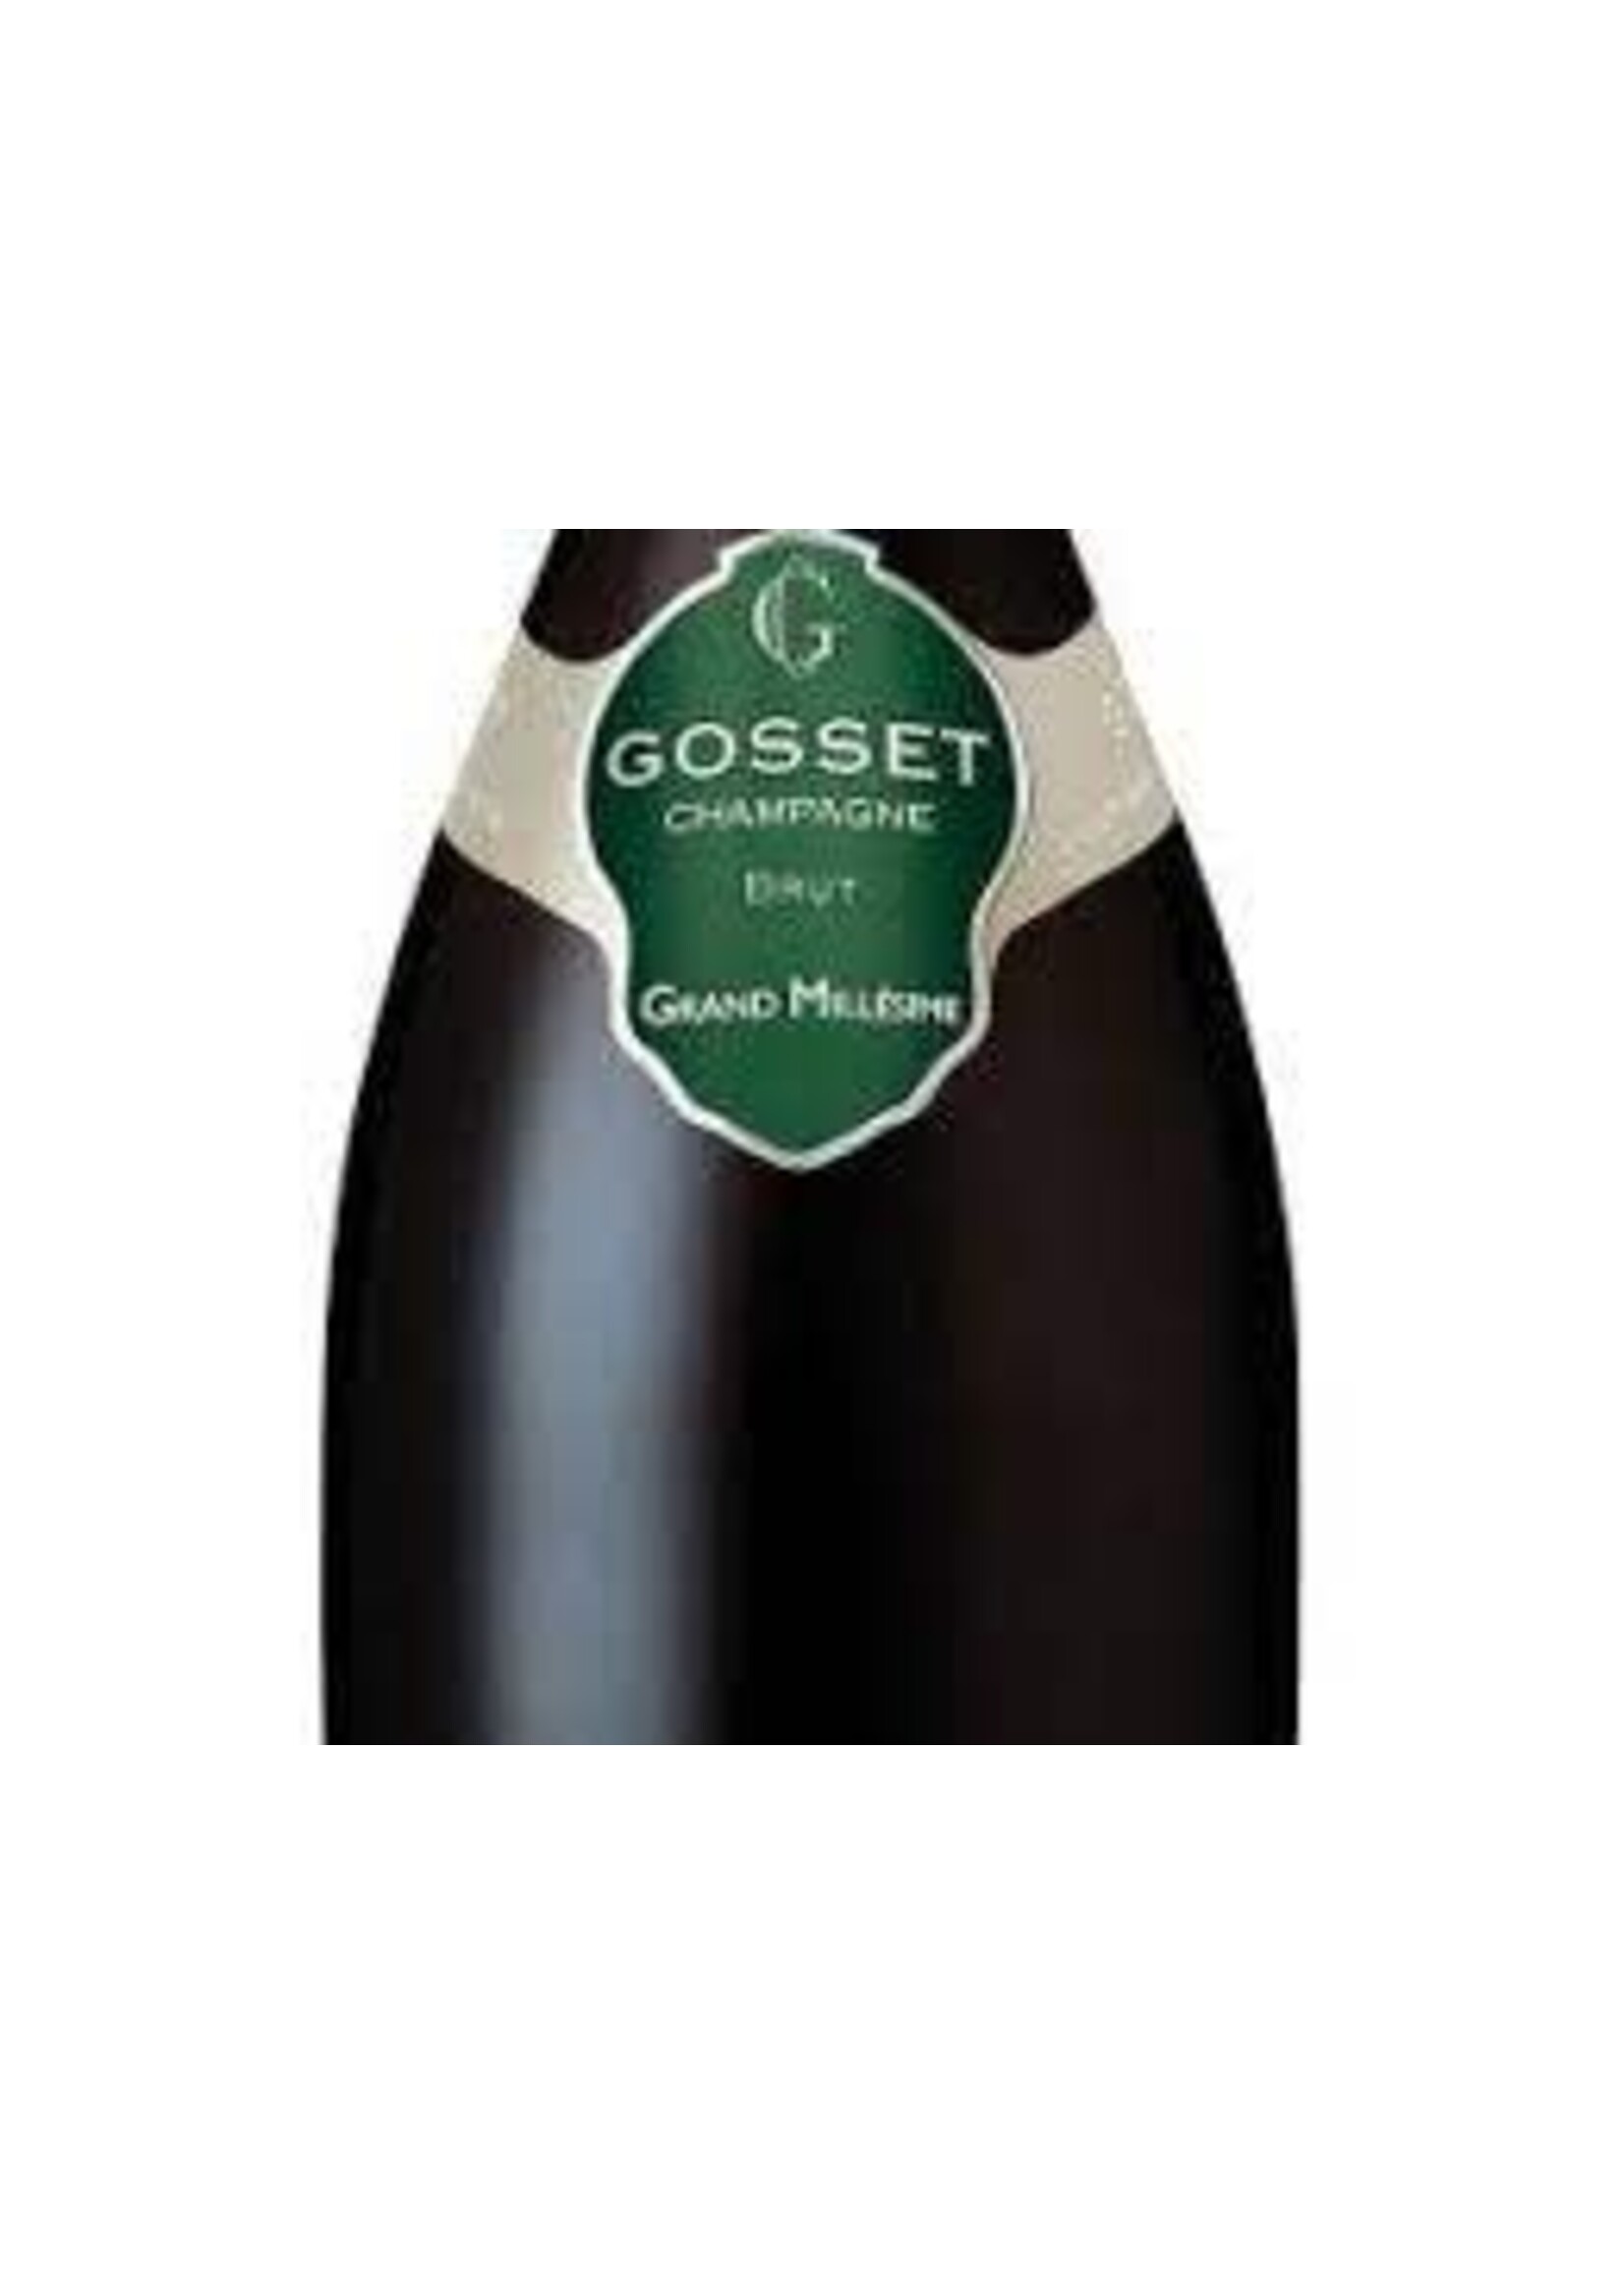 Gosset 2015 Champagne Grand Millesime Brut 750ml